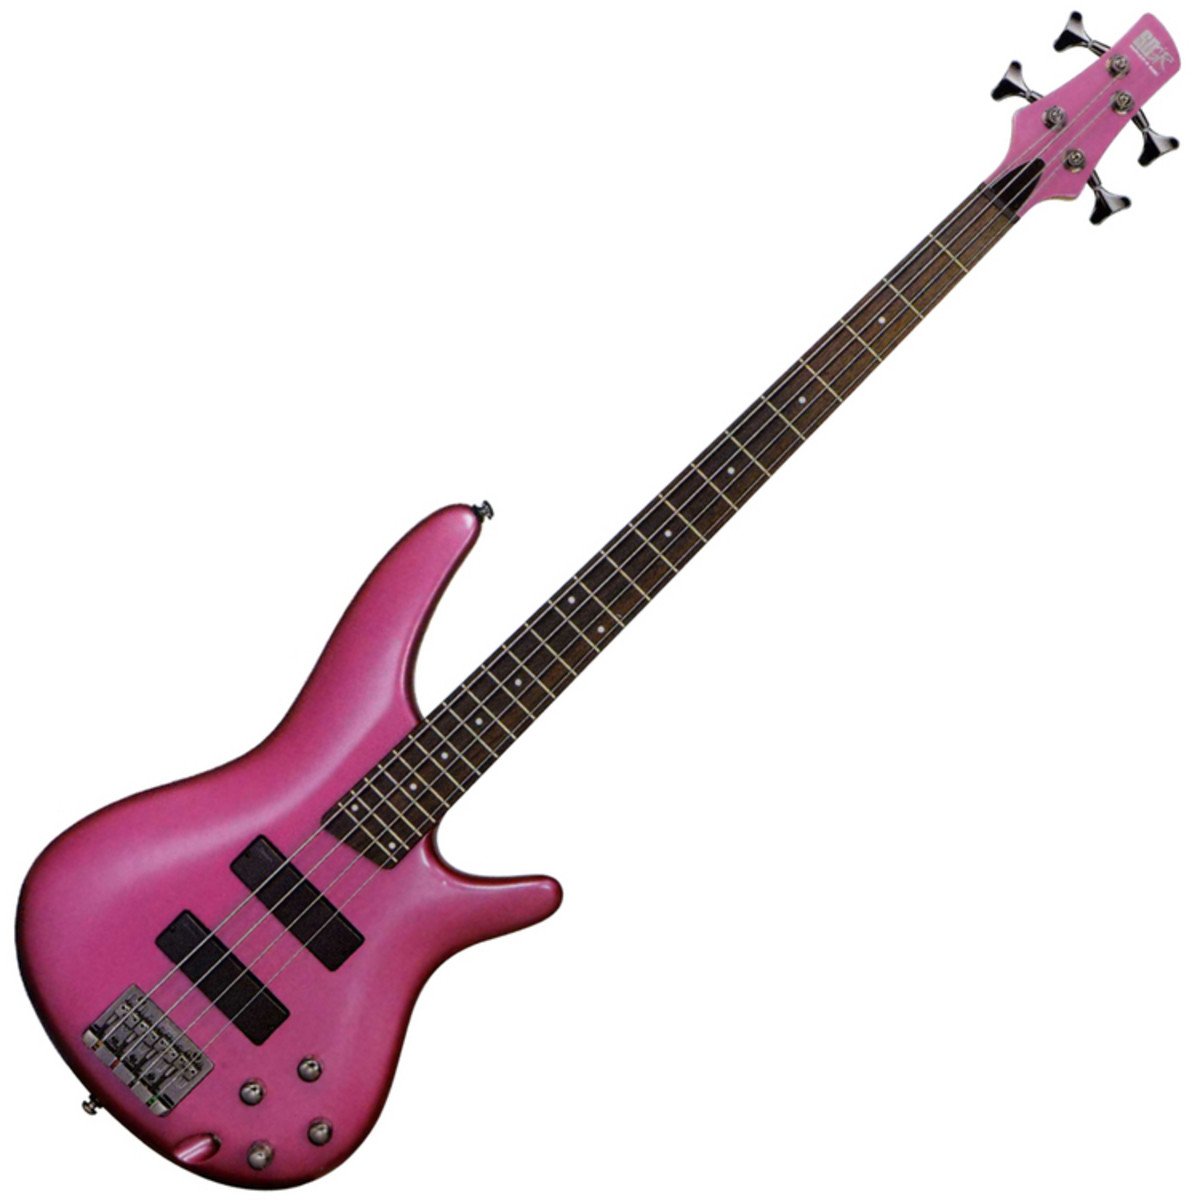 Pink basah. Бас-гитара Ibanez sr300. Бас гитара Ибанез SR 300. Бас-гитара Ibanez btb470. Розовый Ибанез.